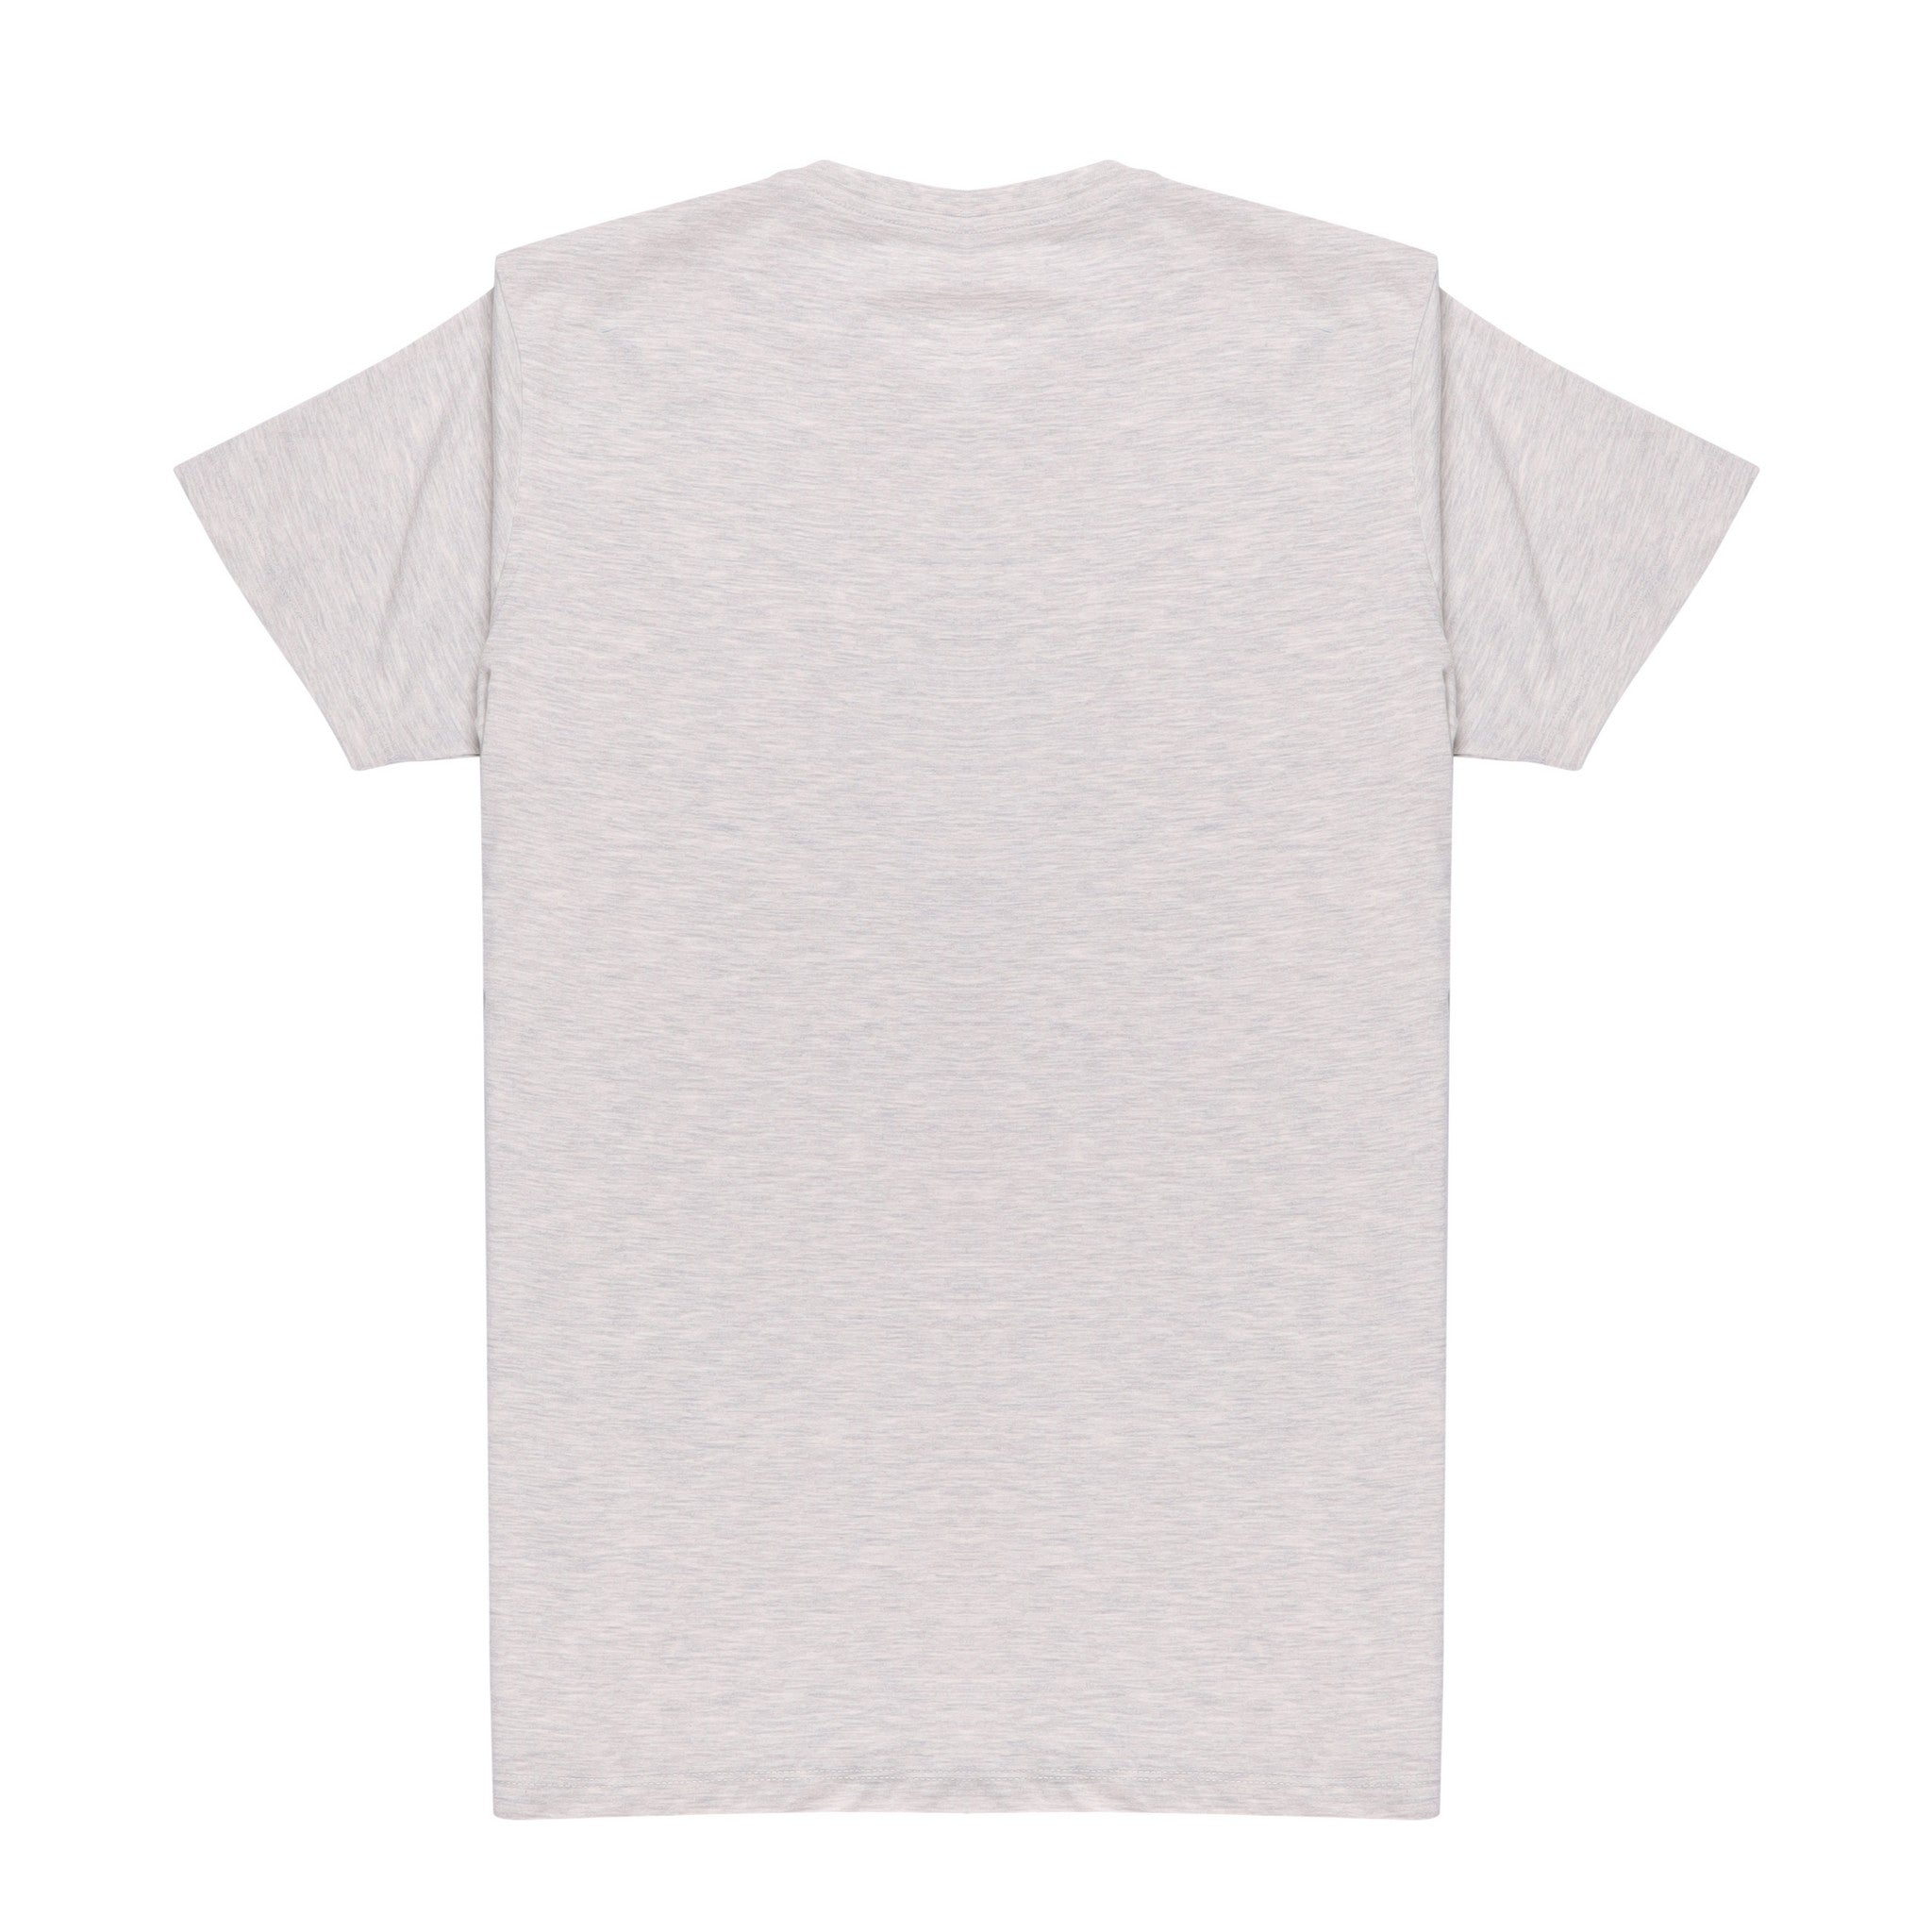 The Sun Print Grey T-Shirt